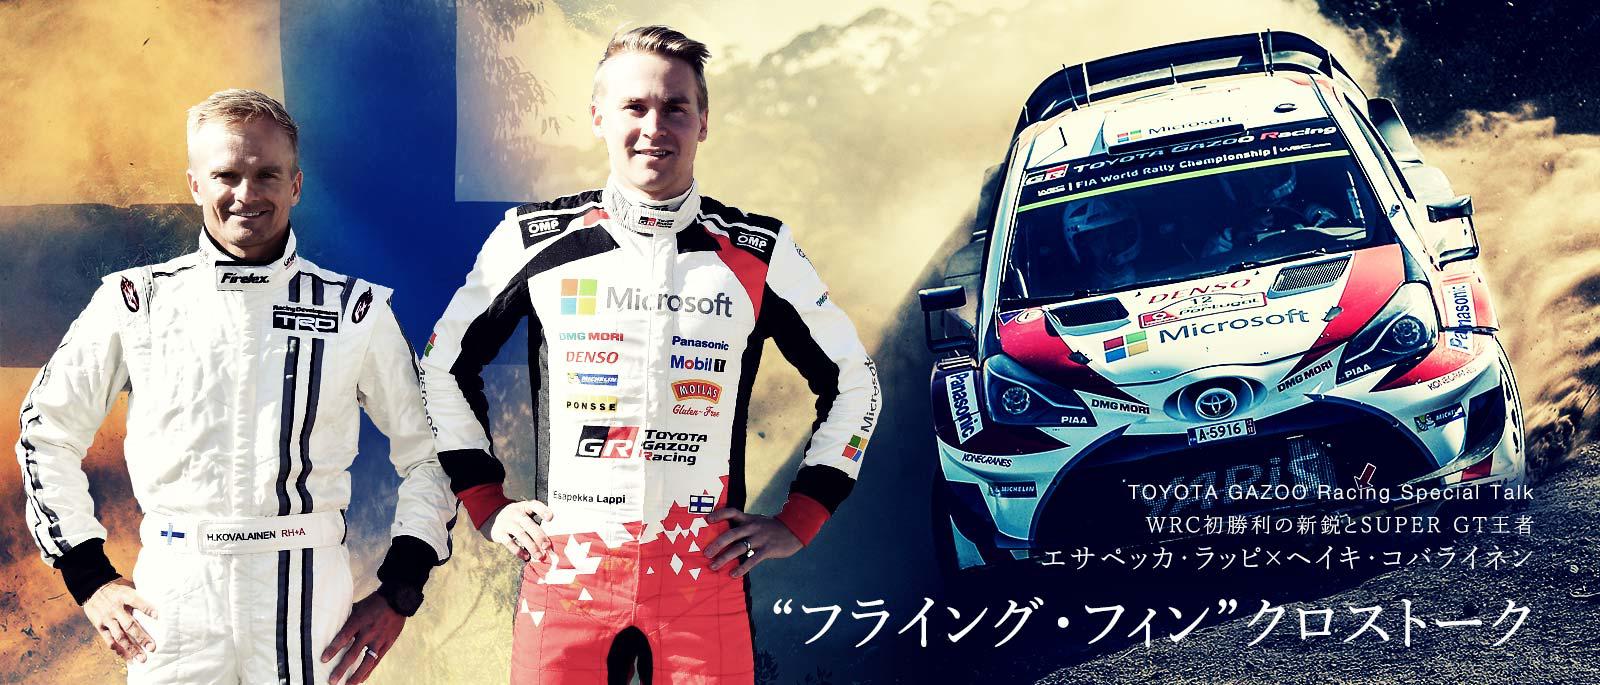 WRC初勝利の新鋭とSUPER GT王者 エサペッカ・ラッピ × ヘイキ・コバライネン "フライング・フィン"クロストーク